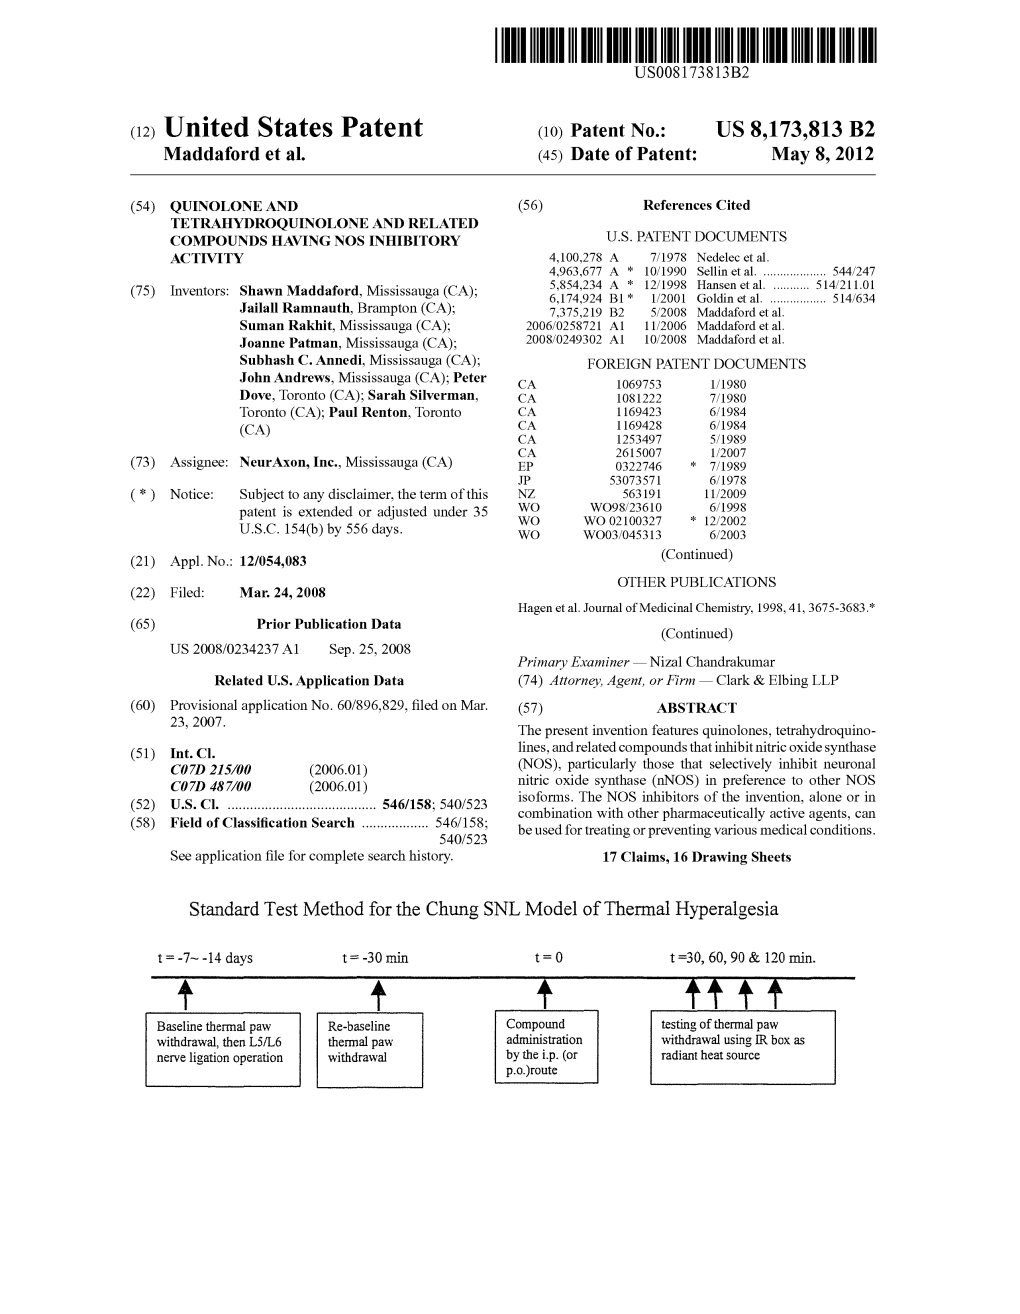 (12) United States Patent (10) Patent No.: US 8,173,813 B2 Maddaford Et Al